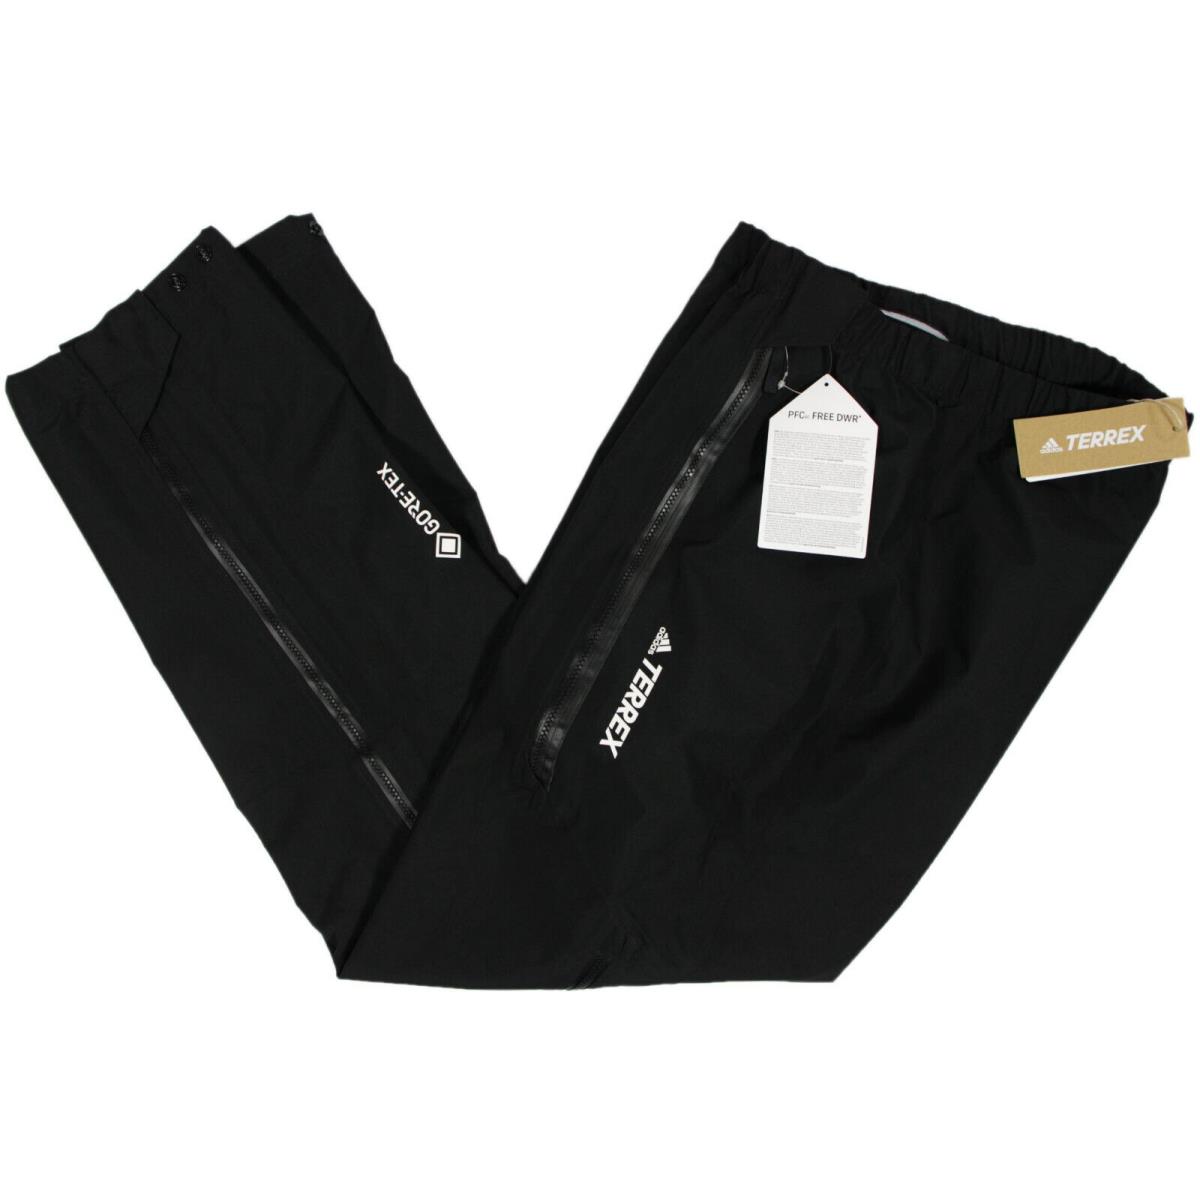 Adidas Gore-tex Gtx Paclite Pants- New- Black Packable Rain/hiking Pants